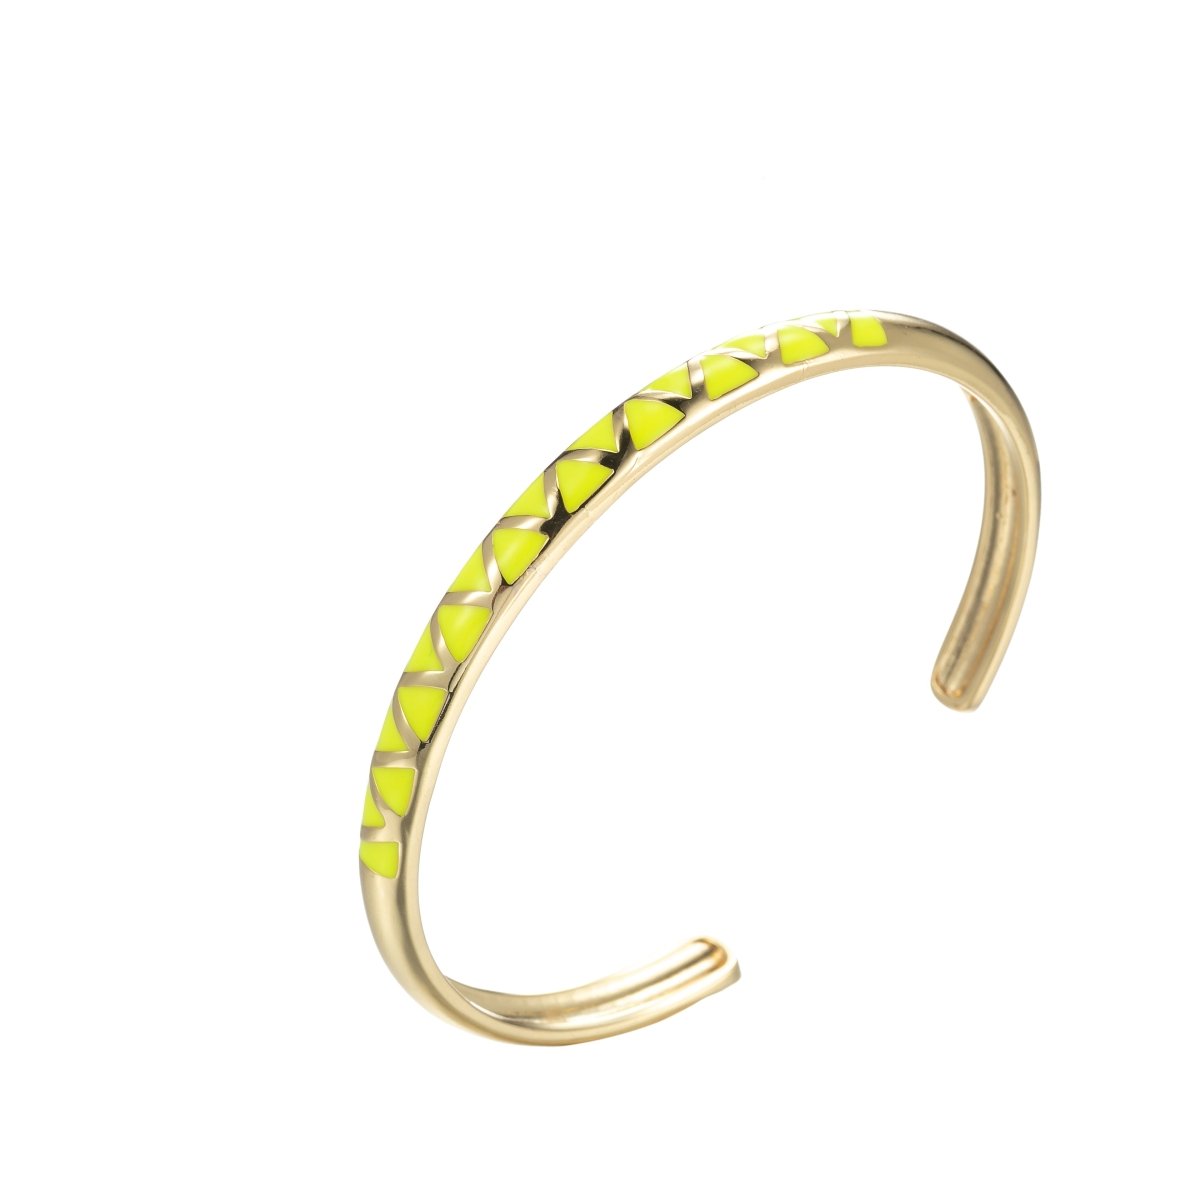 Colorful Enamel Adjustable Bangle Bracelet, 18K Gold Filled Enamel Open Bracelet, stacking bracelet | WA-046 to WA-054 Clearance Pricing - DLUXCA